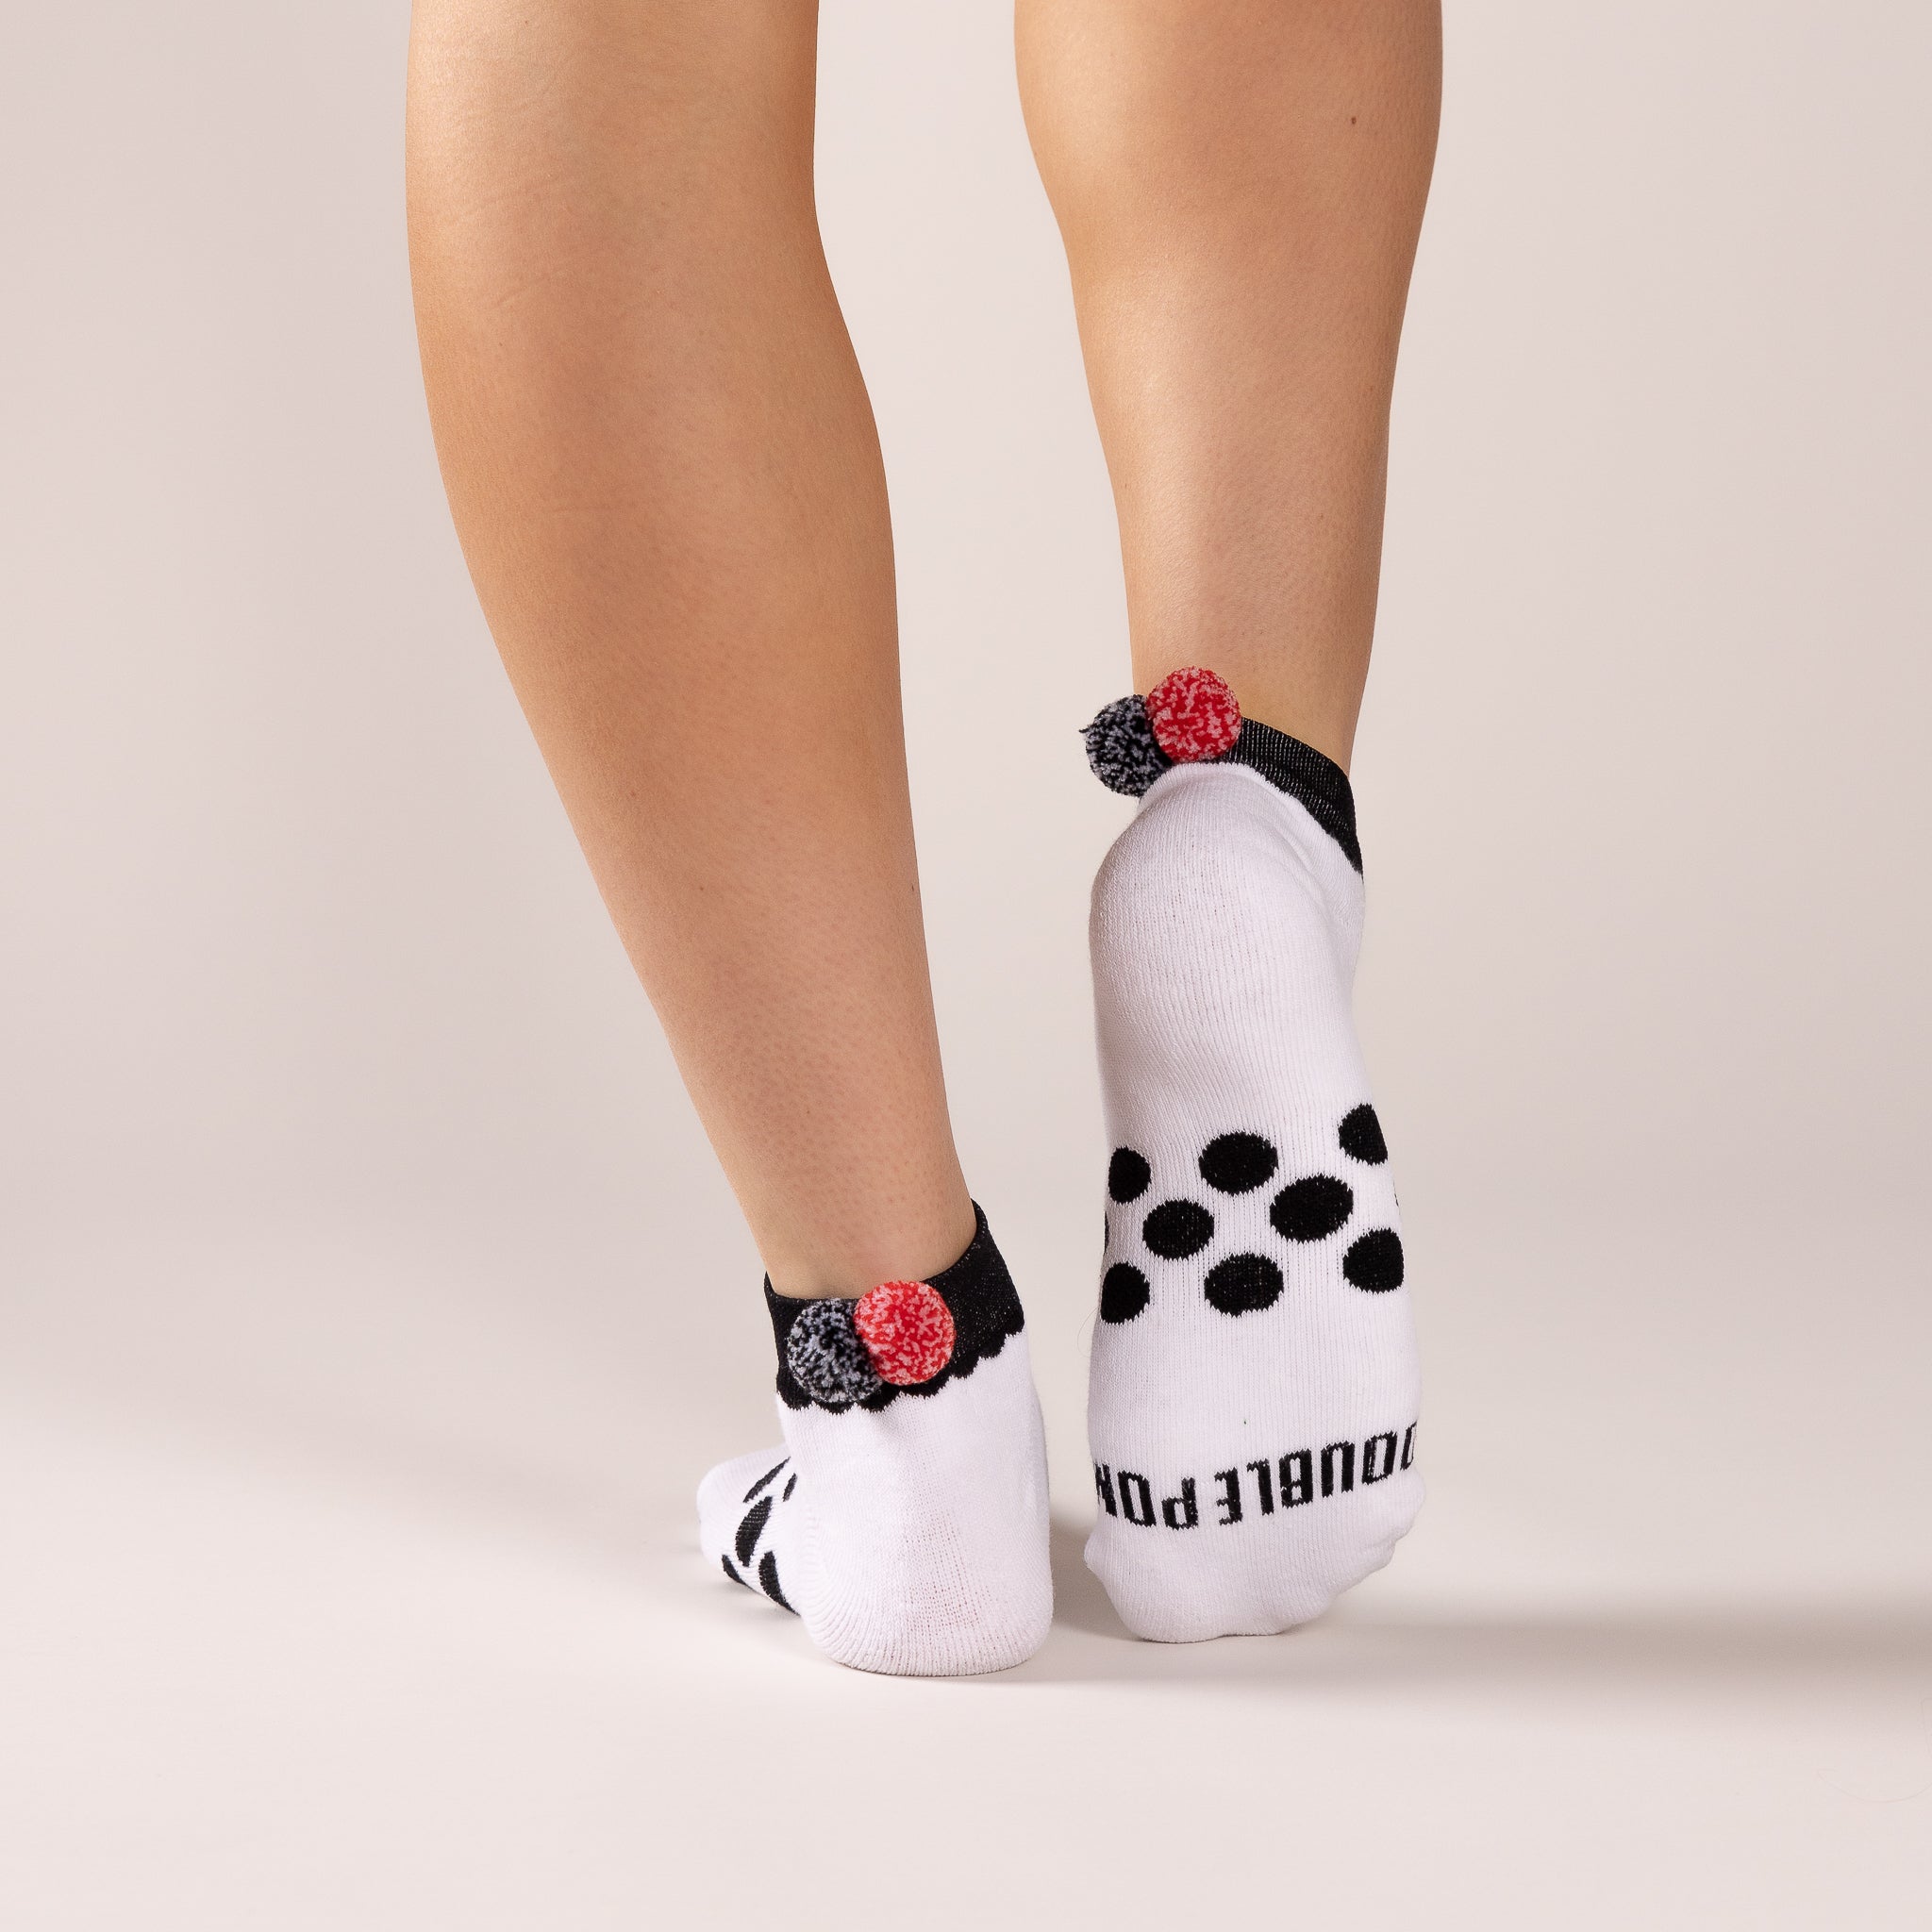 Signature Athletic Ankle Sock w/ Black Trim and Black + Red Confetti Poms